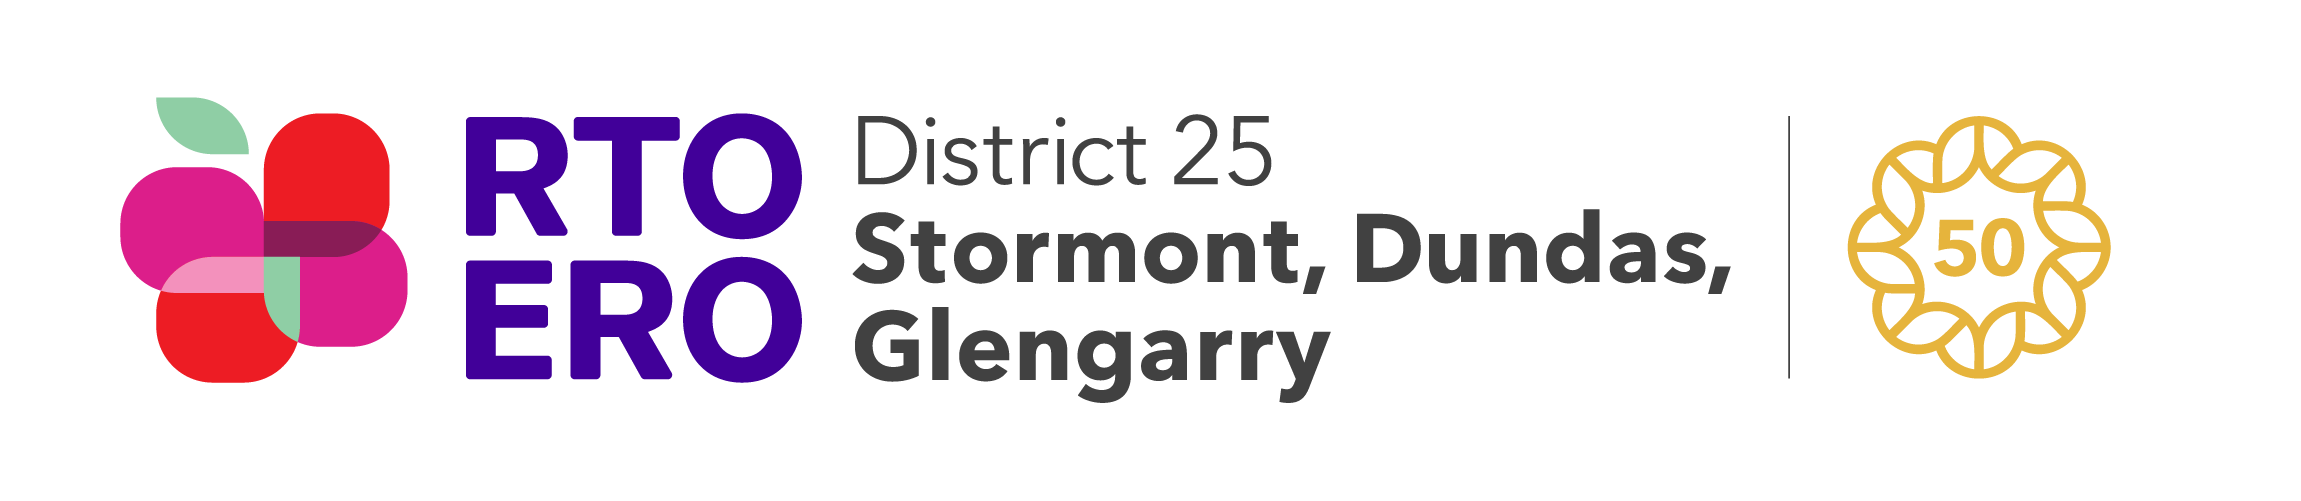 District-25-Stormont Dundas Glengarry logo